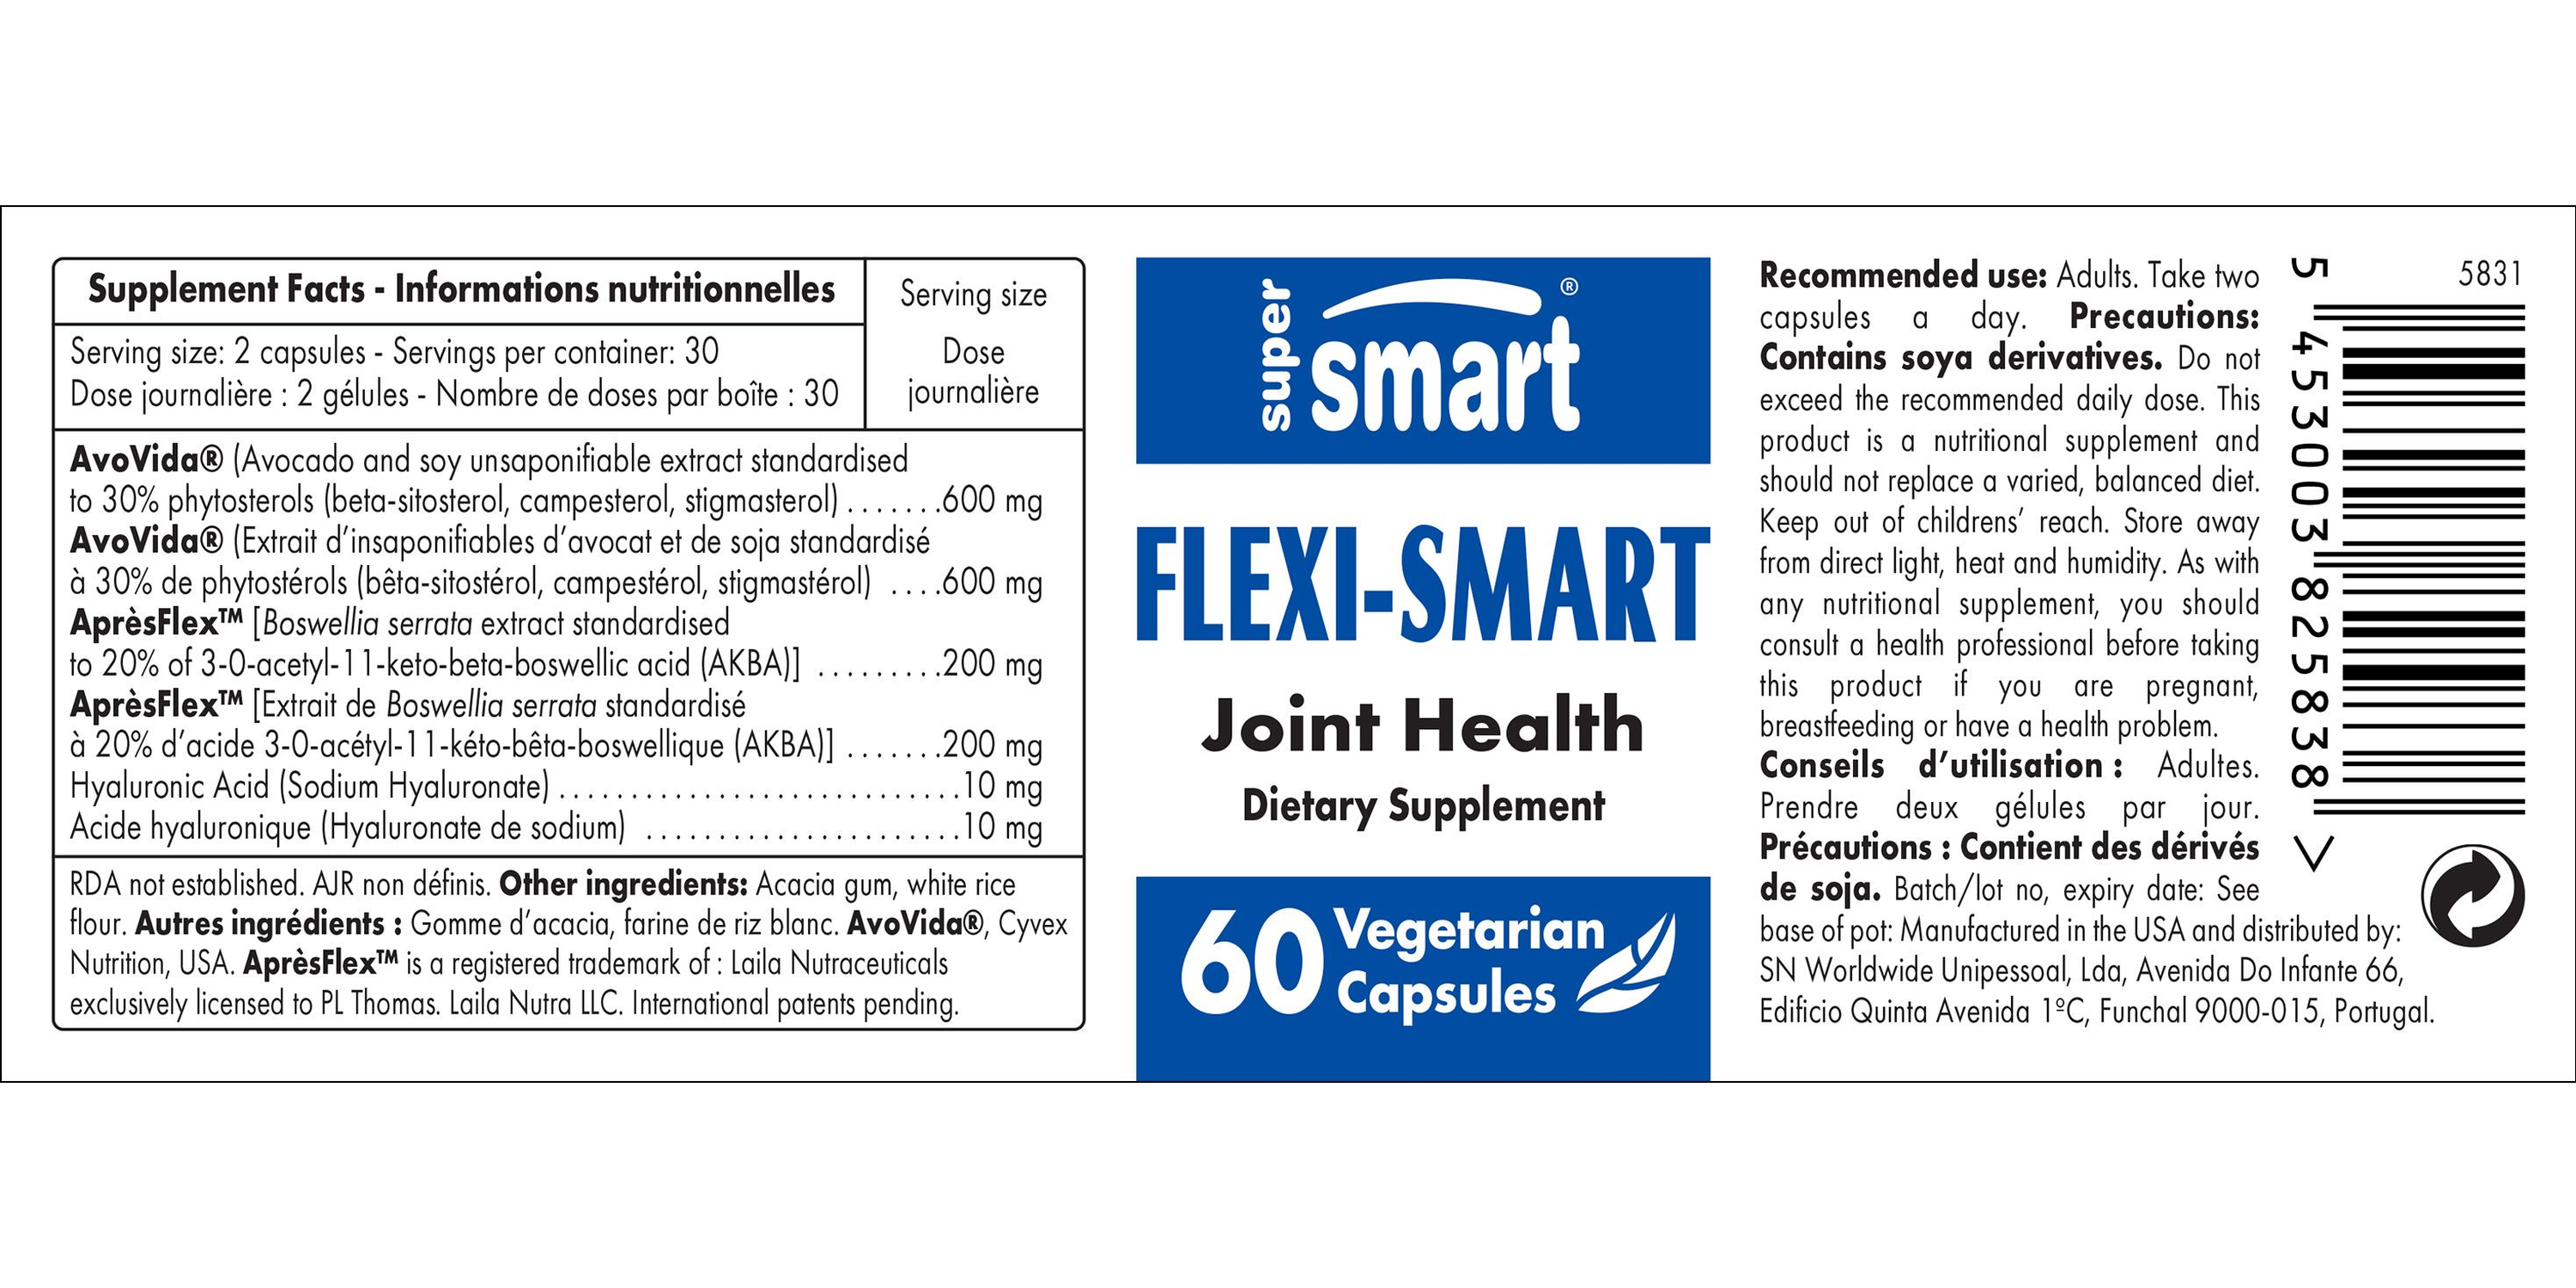 Flexi-Smart Supplement